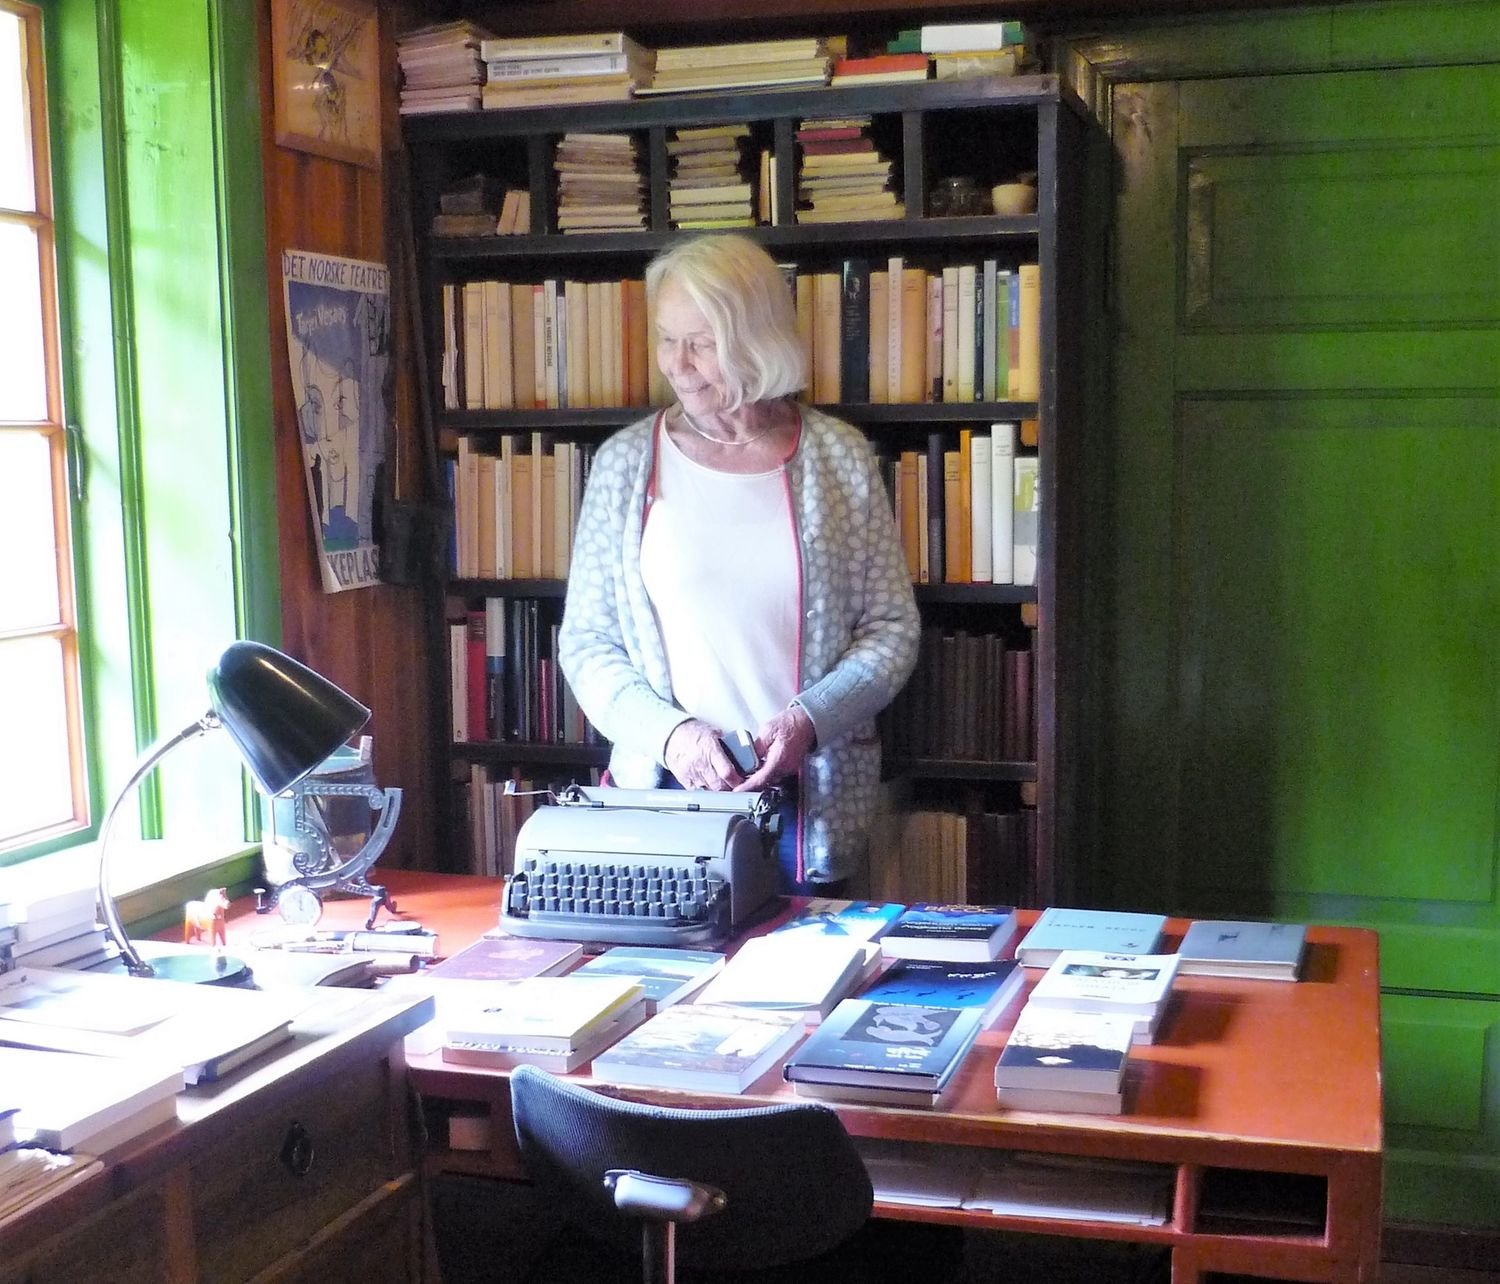 Tarjei vesaas daughter guri vesaas at her father's desk at home in midbtø in telemark photo alva gehrmann